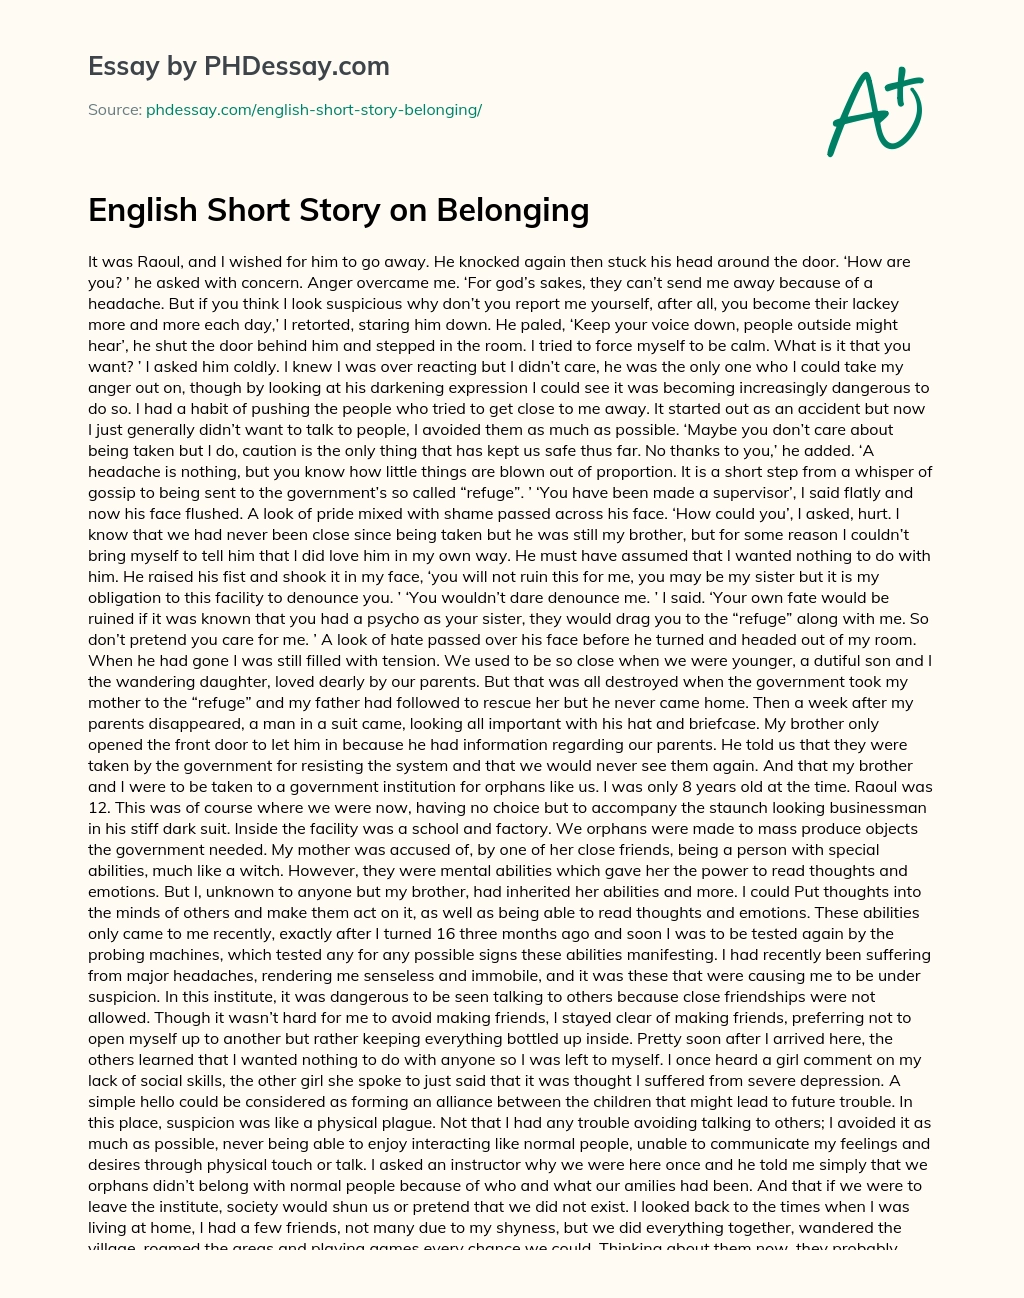 English Short Story on Belonging essay